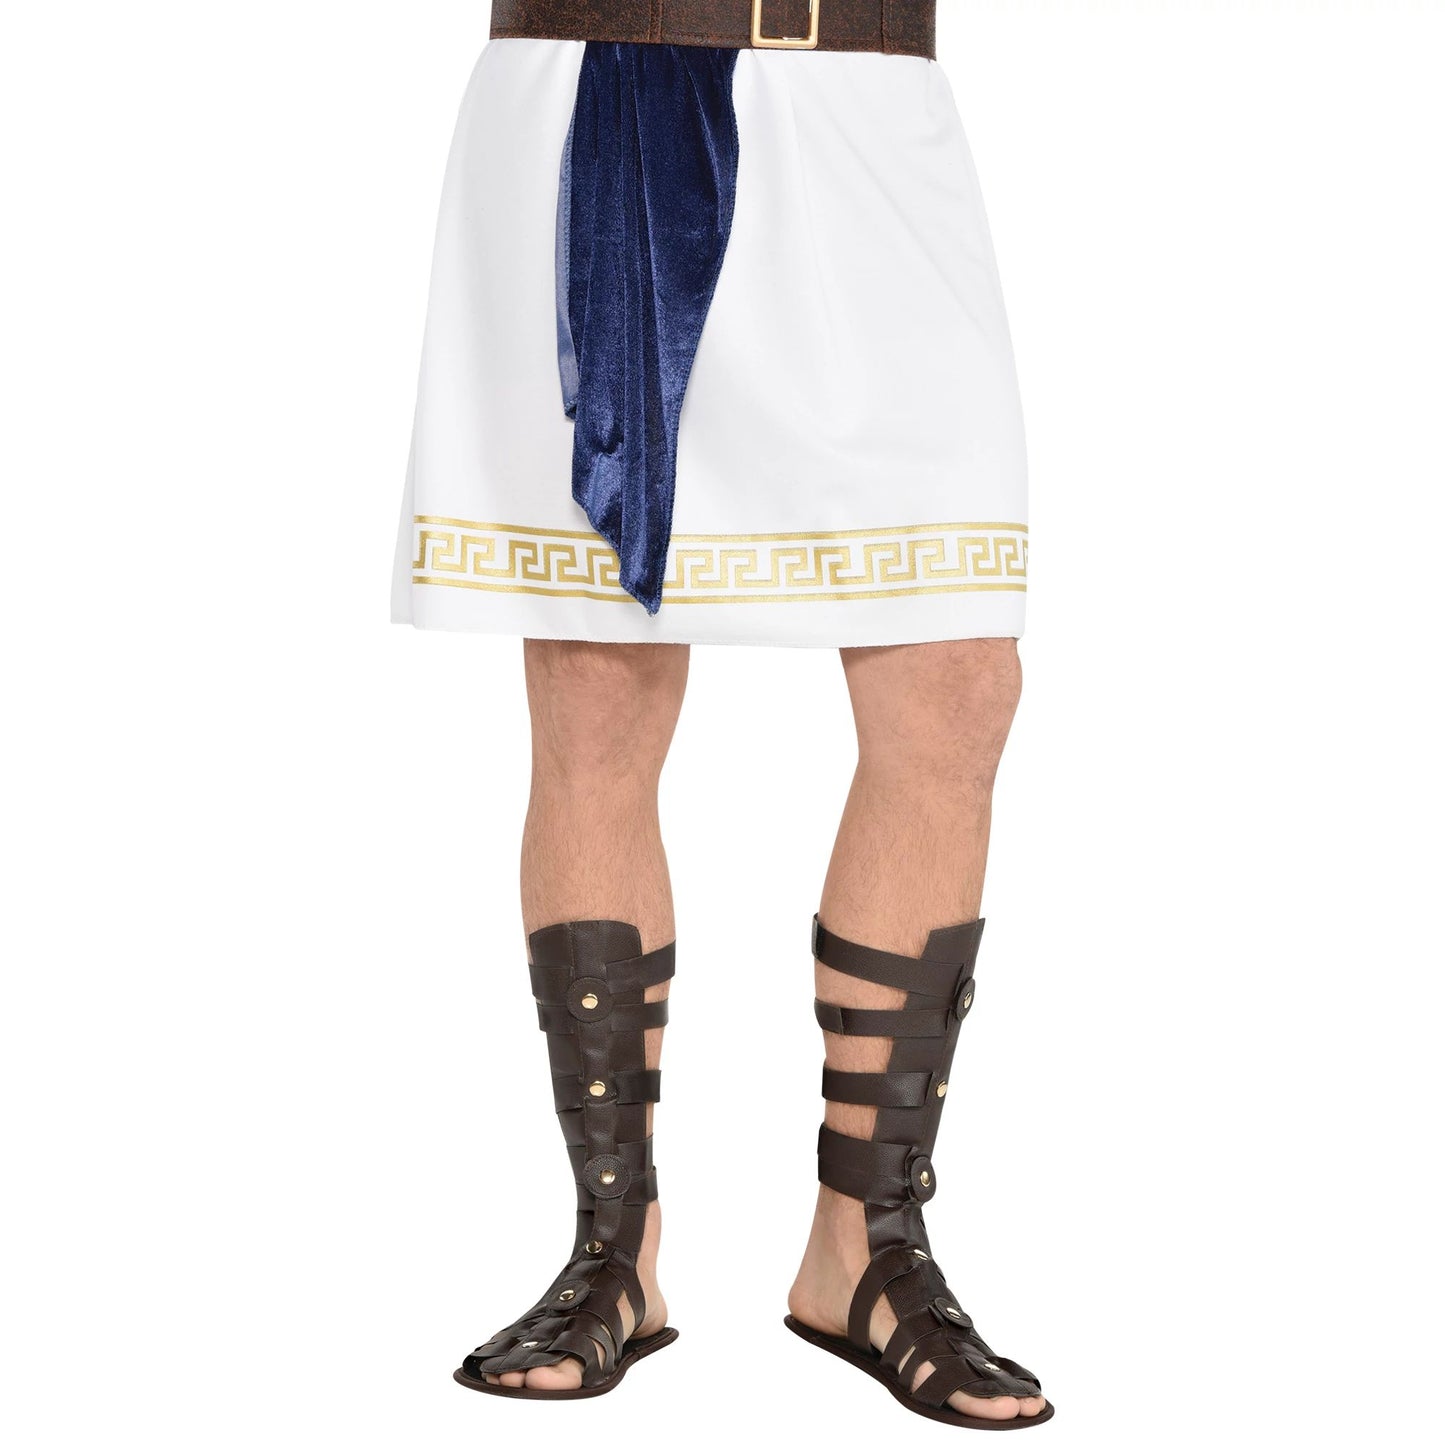 Roman Gladiator Deluxe Sandals Adult Costume Accessory, Small/Medium